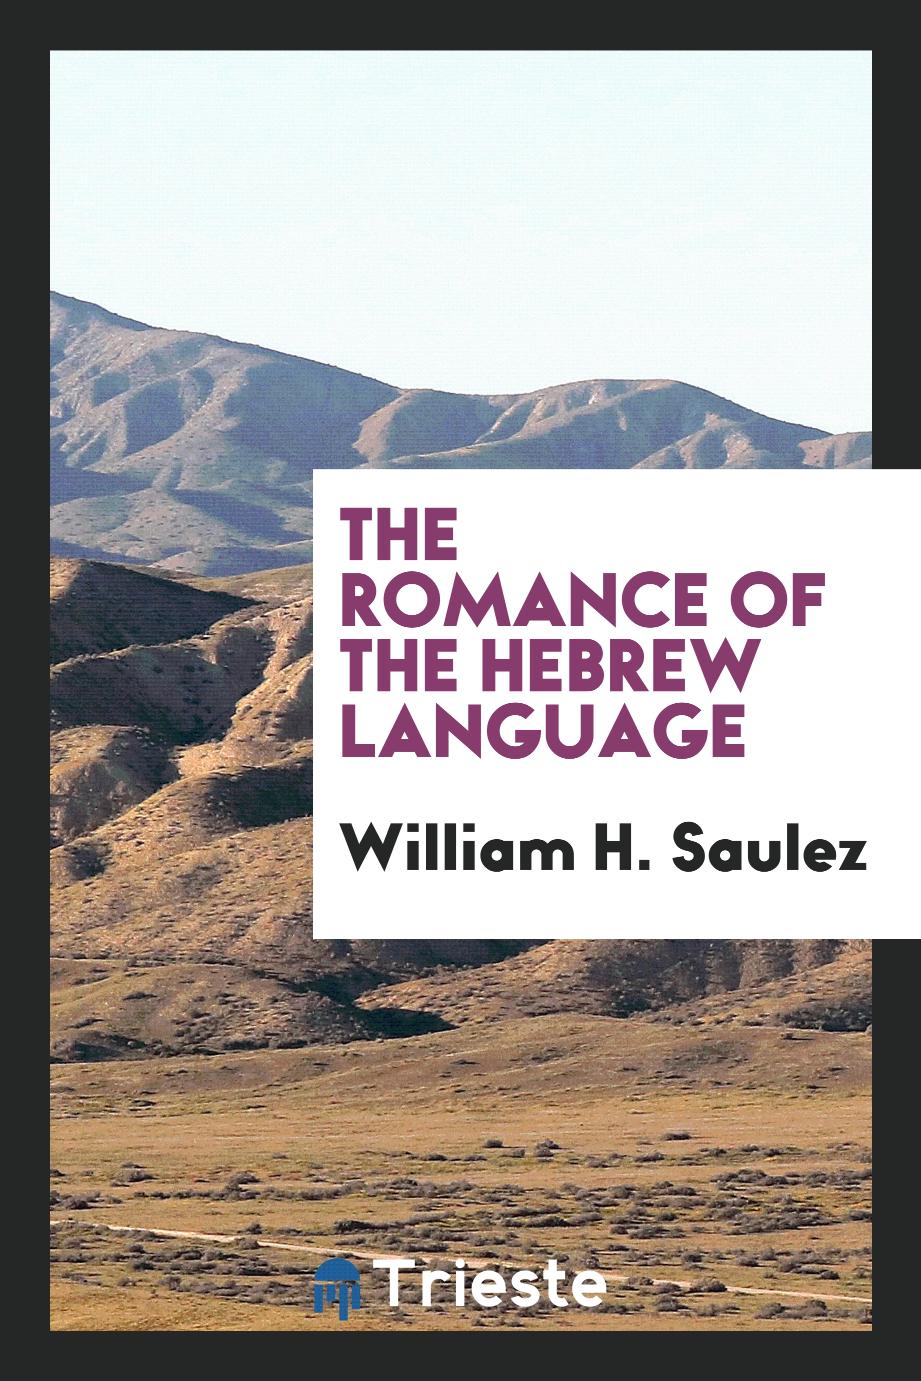 The romance of the Hebrew language